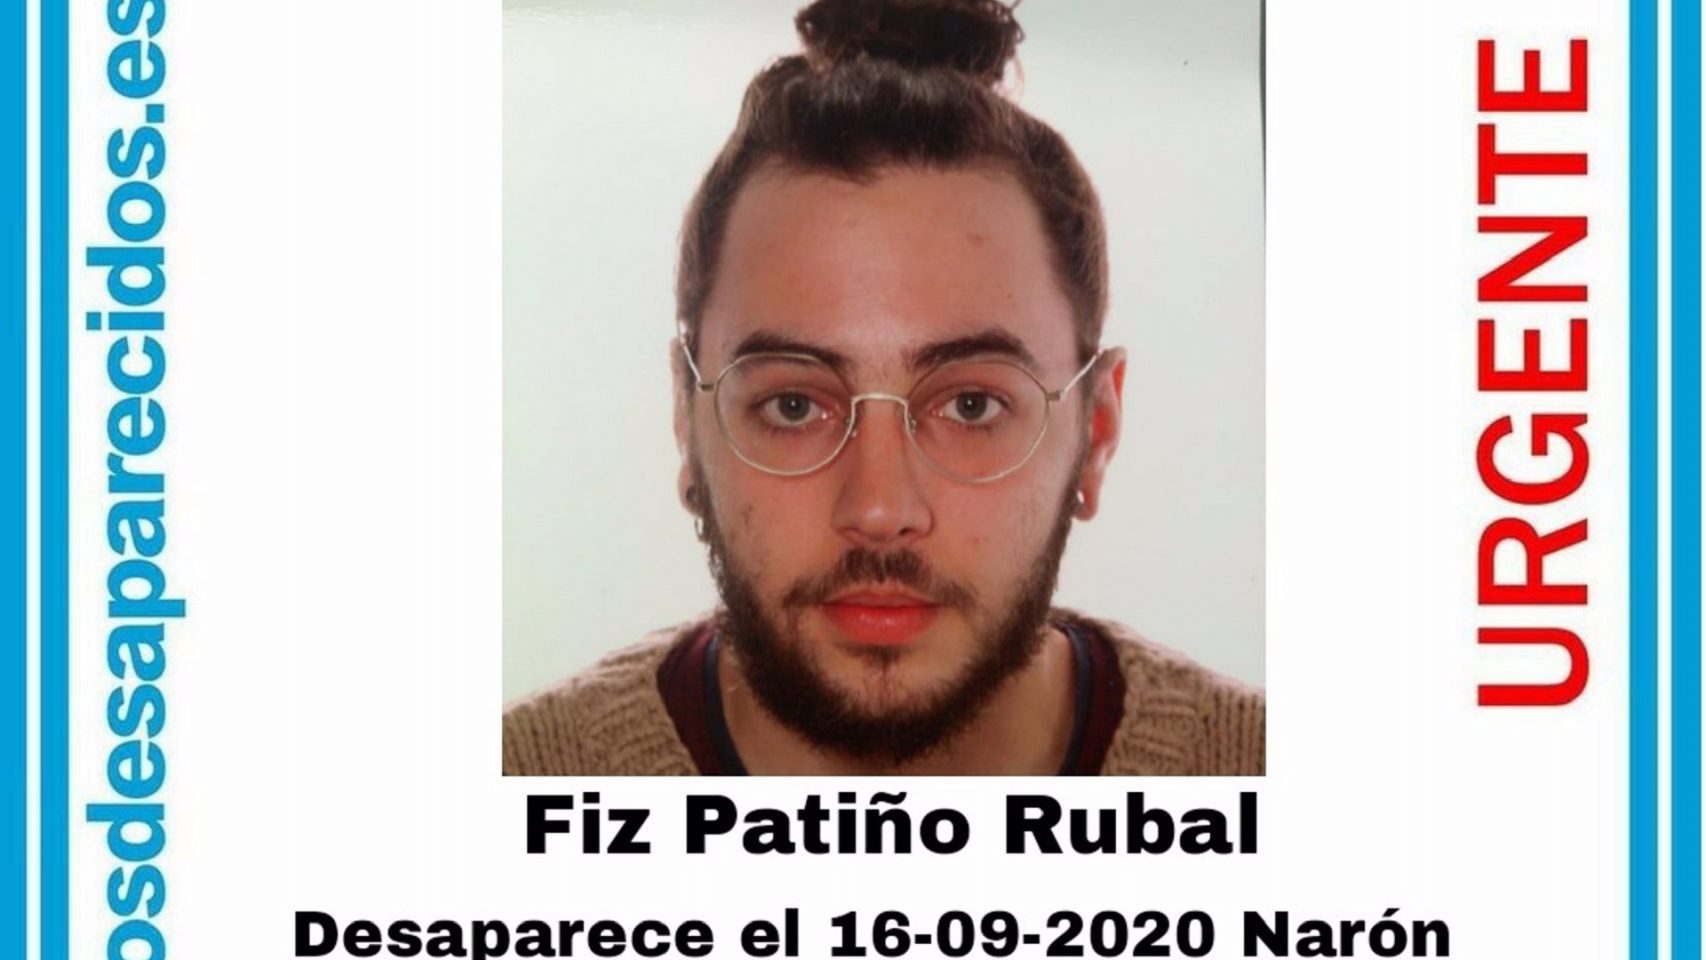 Fiz Patiño Rubal, desaparecido desde mediados de septiembre.
